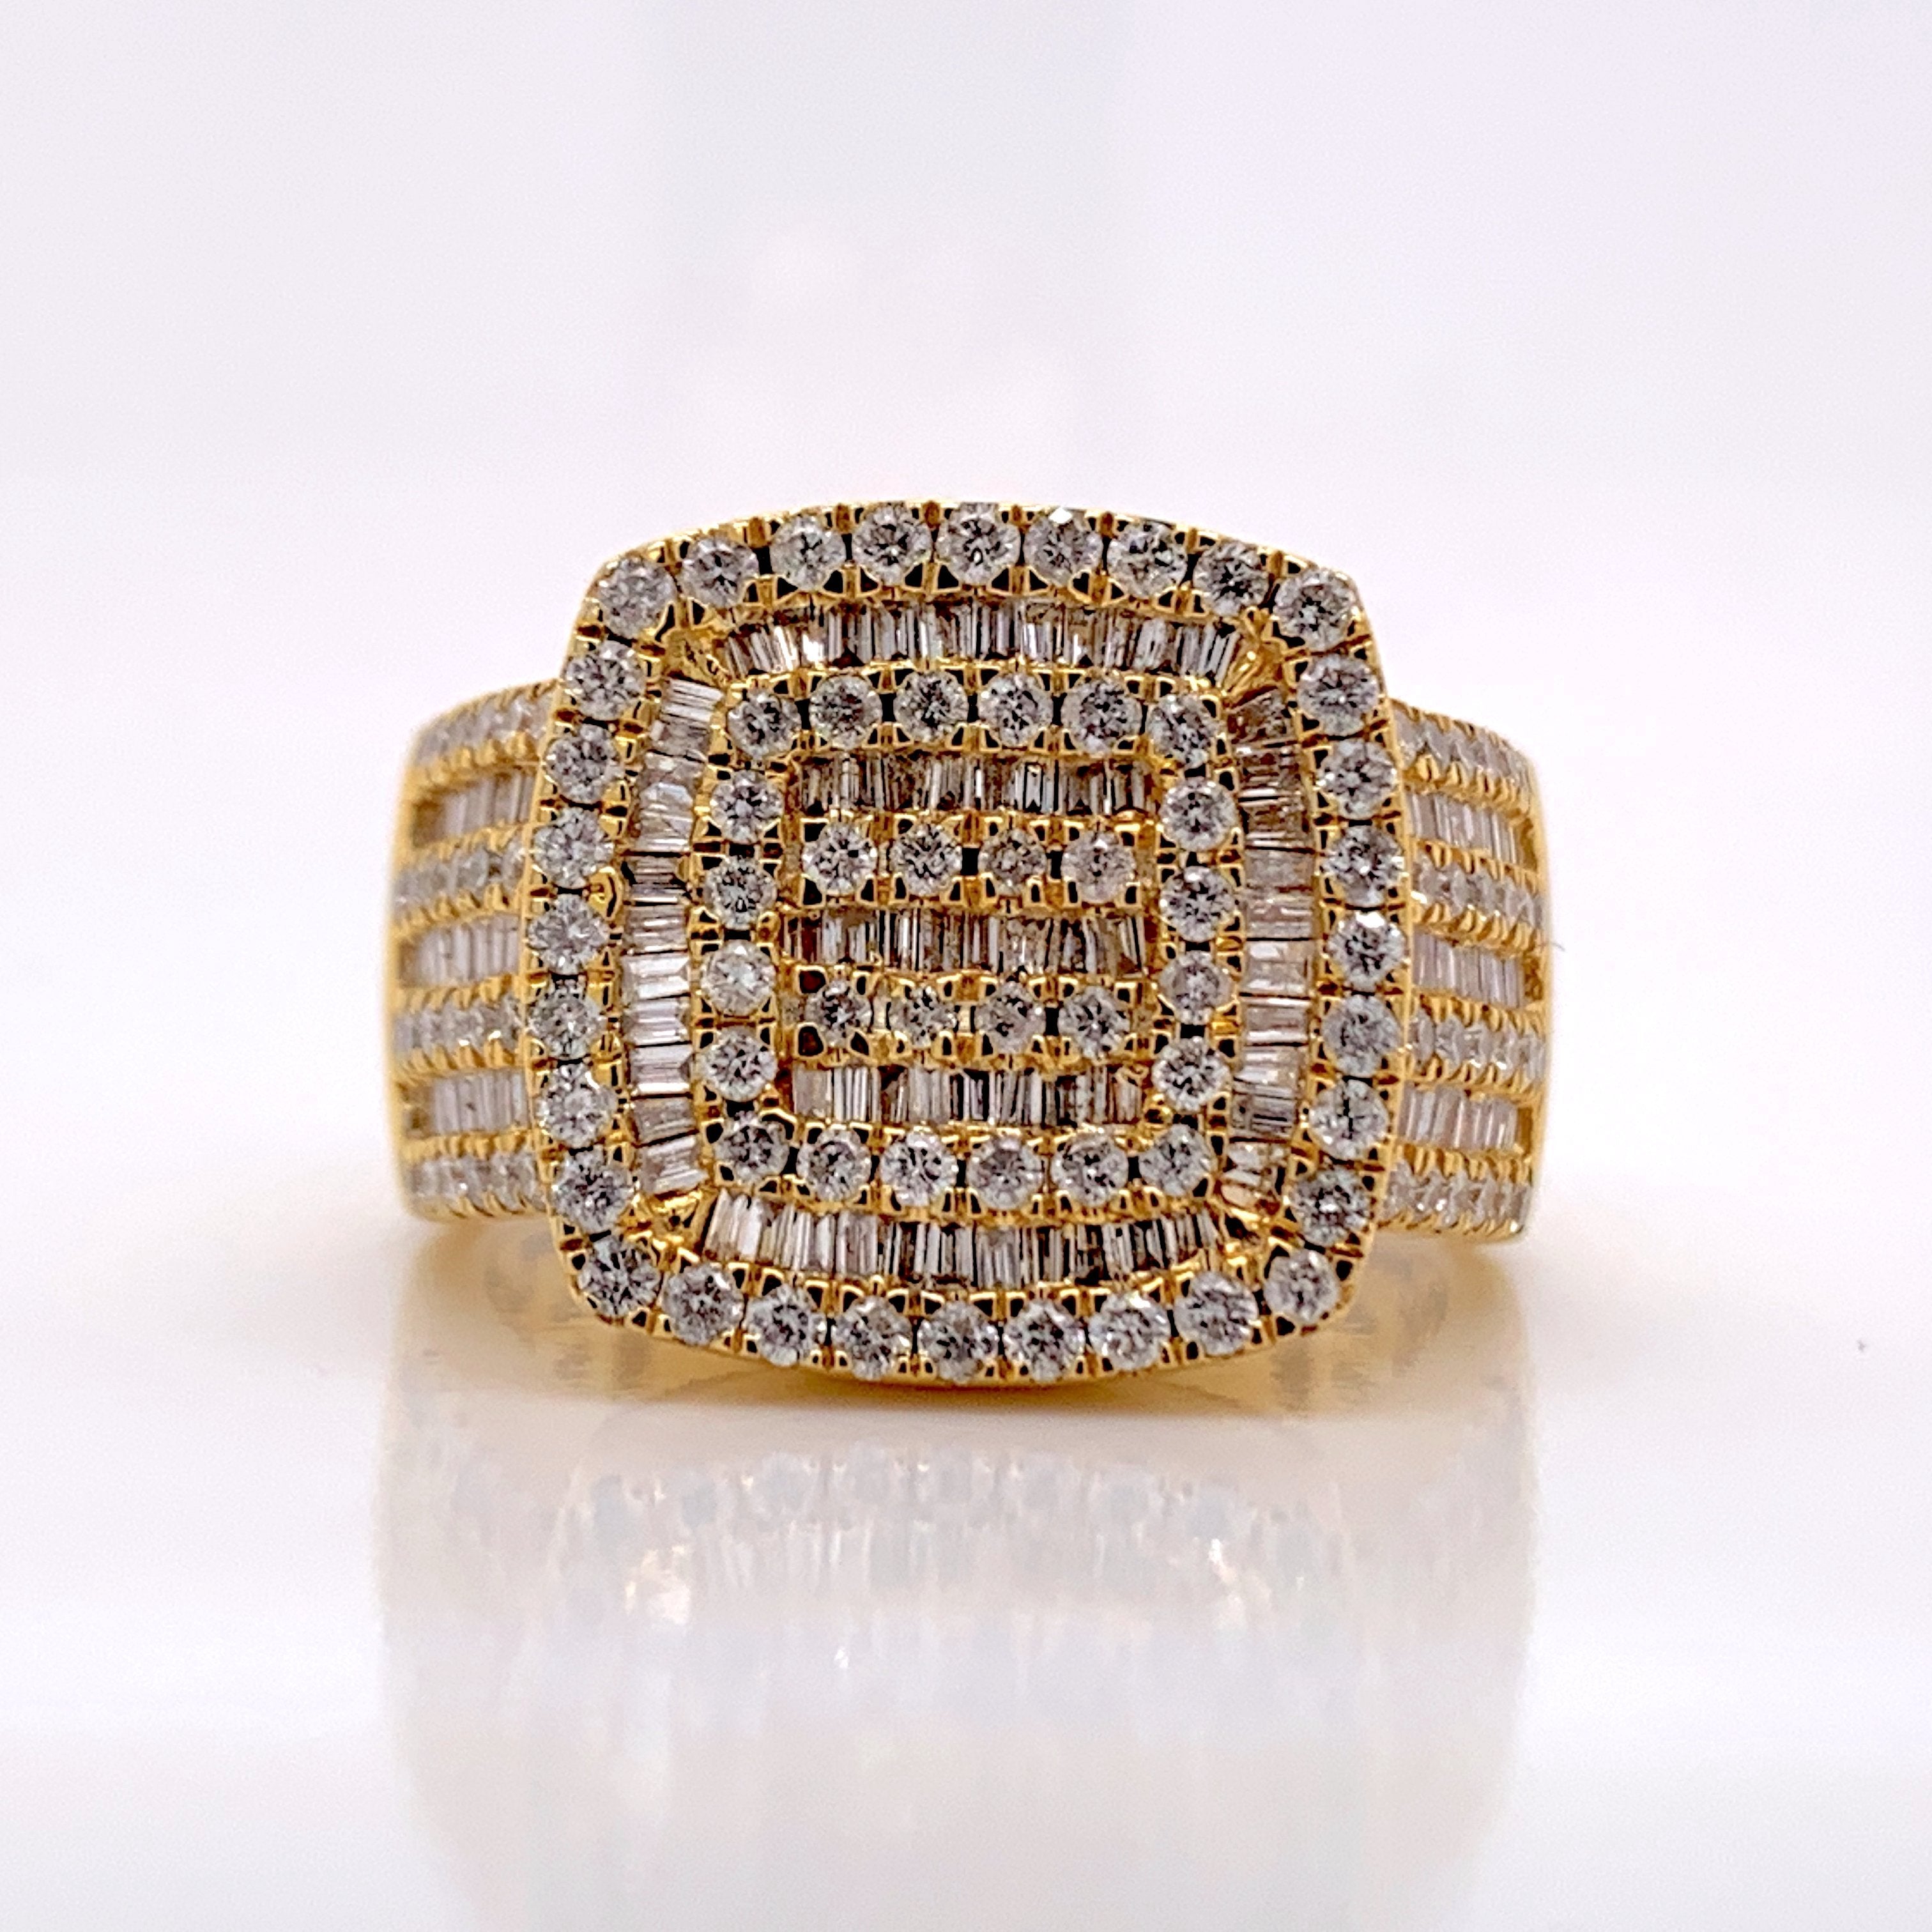 2.08 CT. Diamond 10K Gold Ring - White Carat Diamonds 